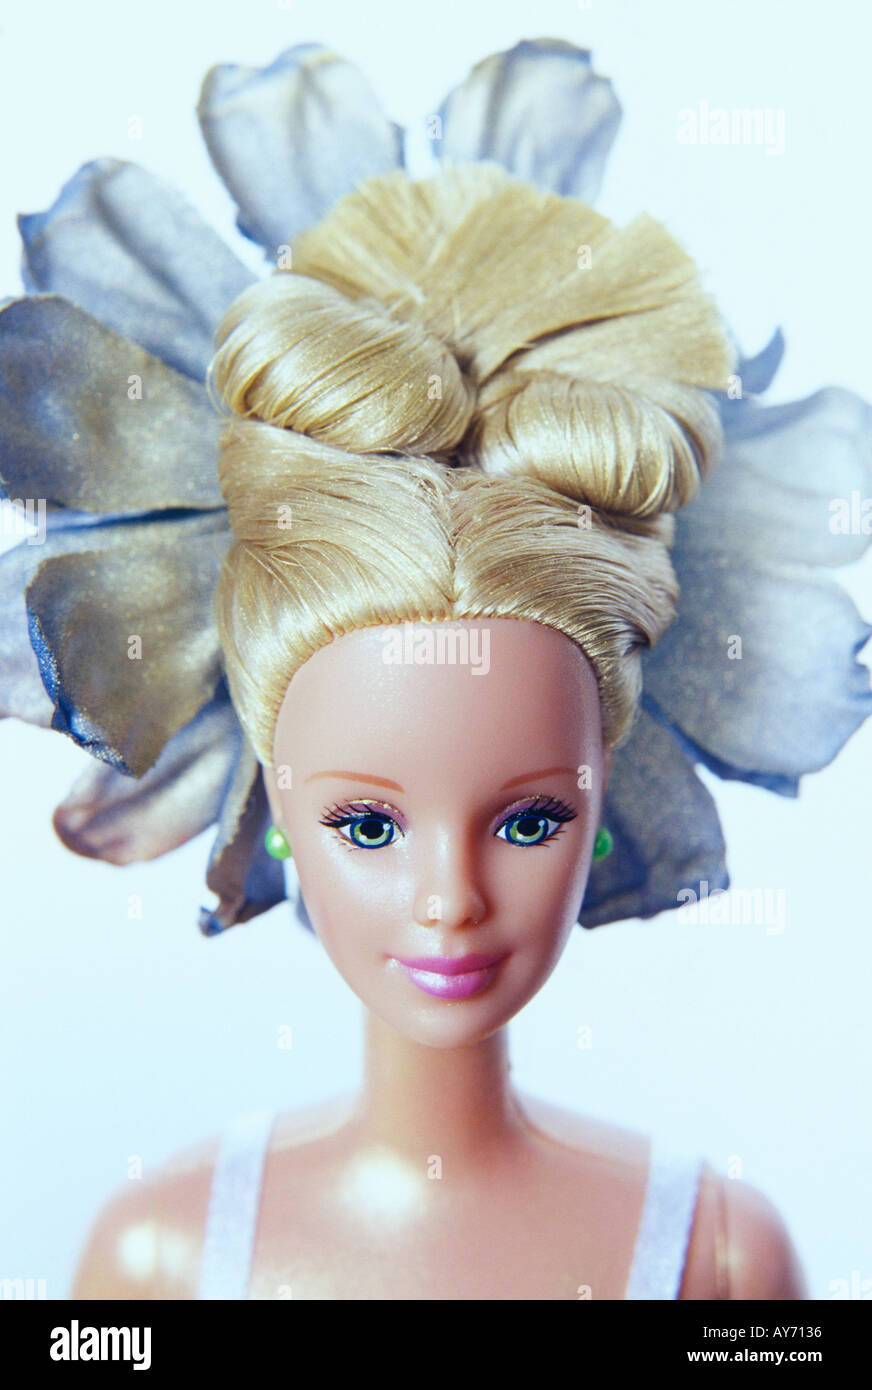 Barbie Doll With Wild Hairstyle Stock Photo 1798453 Alamy